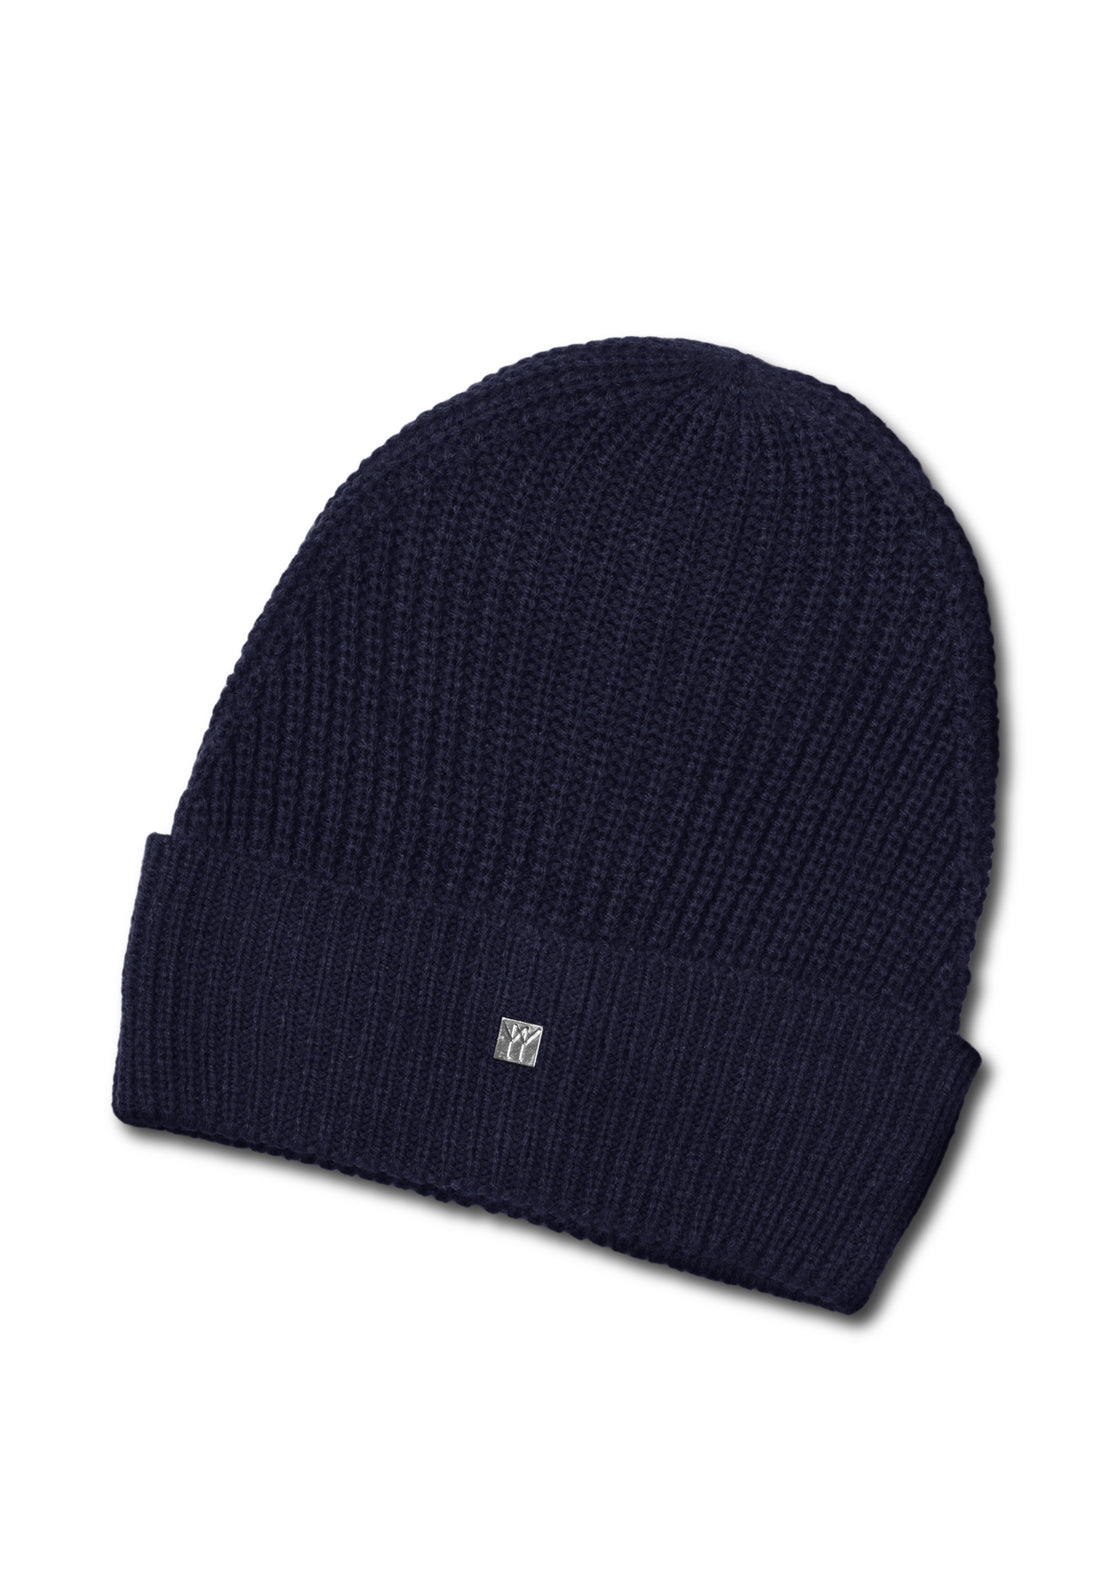 Ribbed wool cap with metal logo - Blue